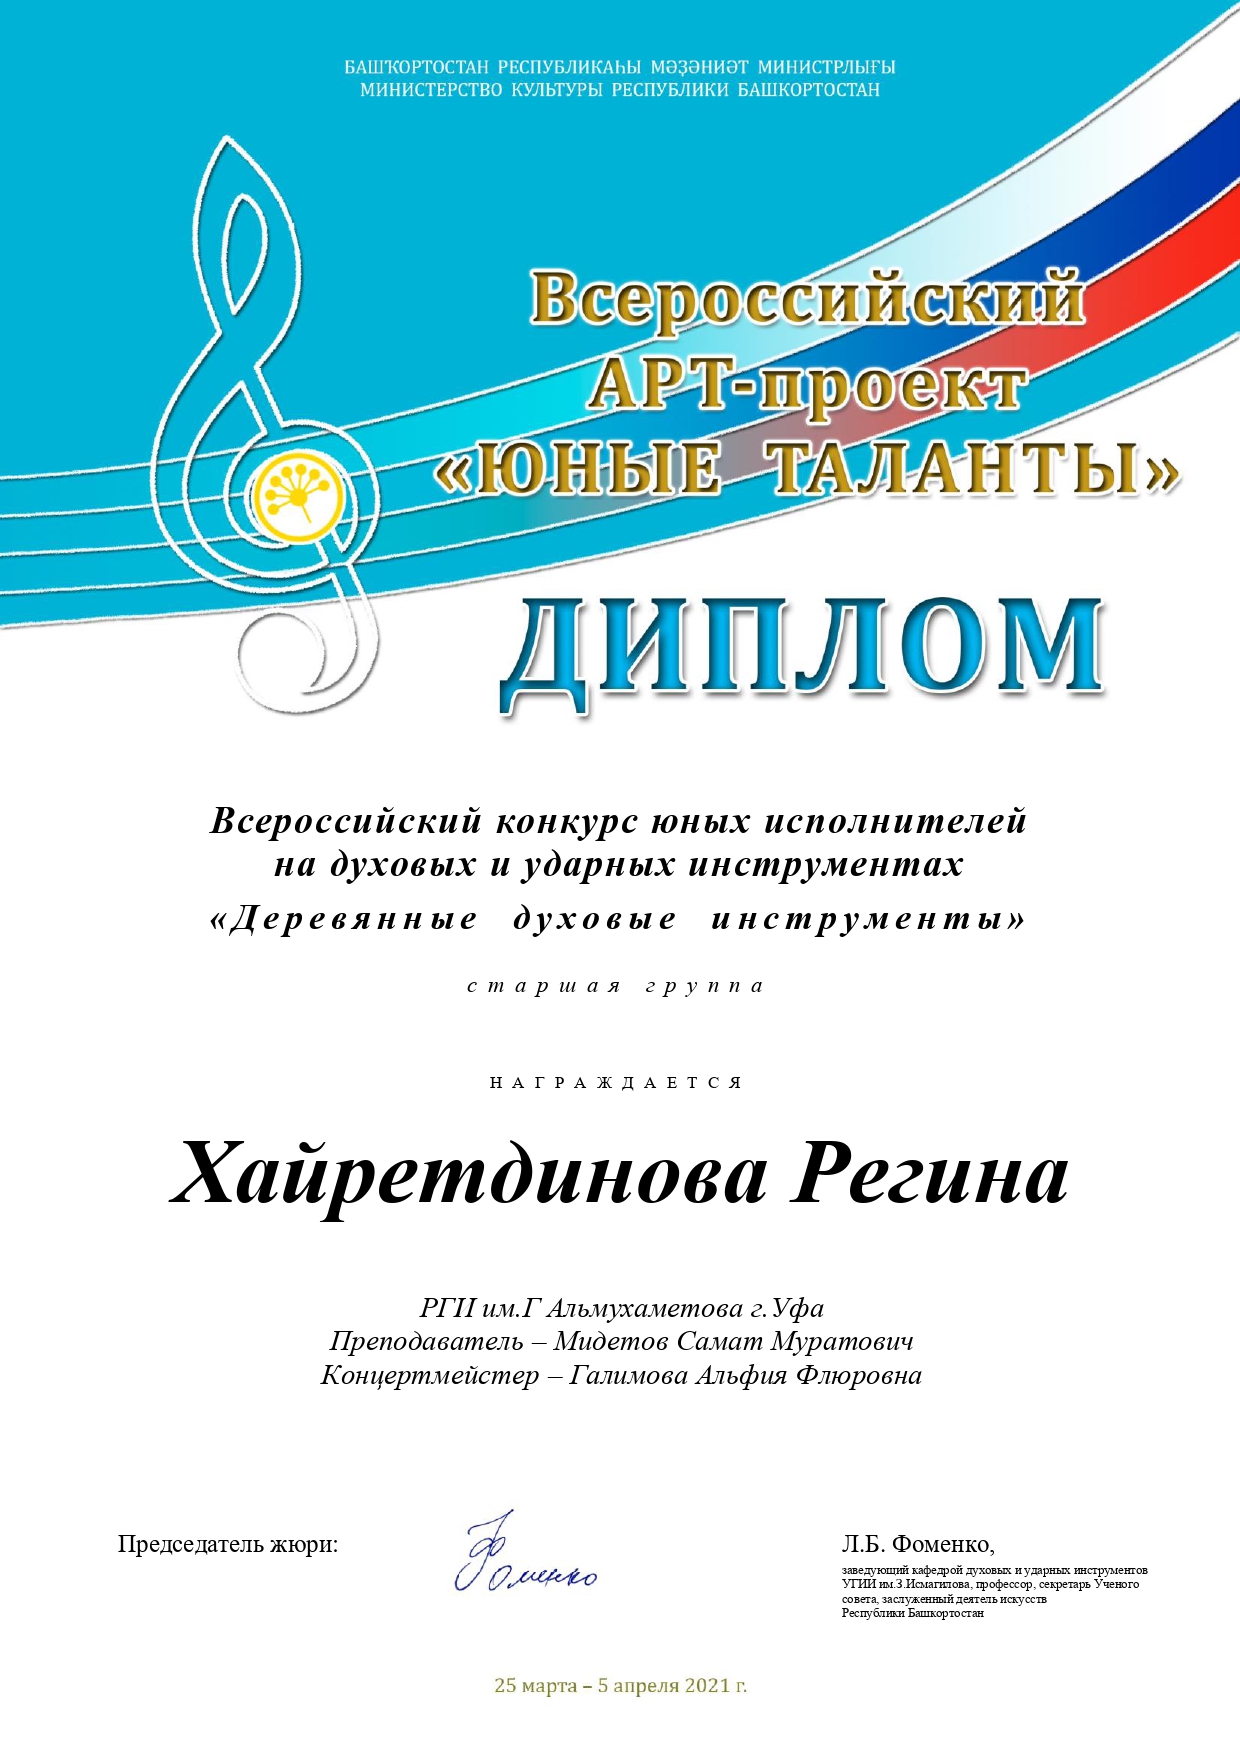 Хайретдинова Регина 1 page 0001